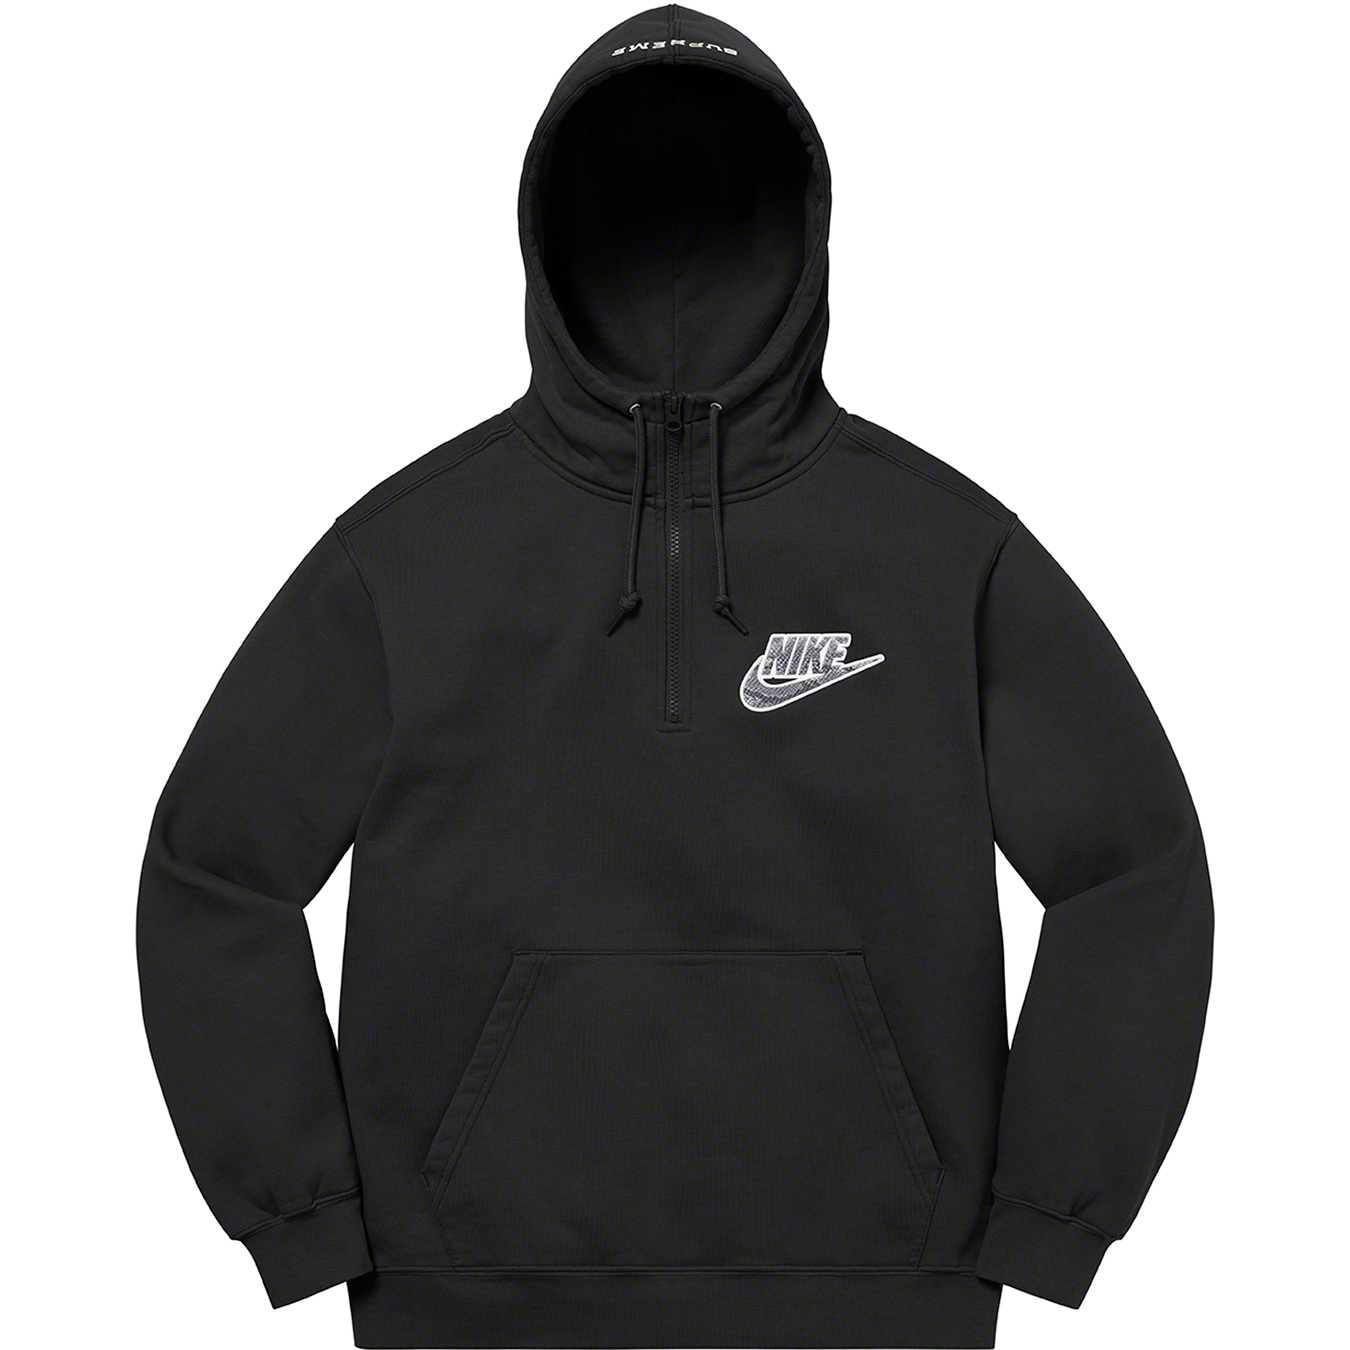 Supreme®/Nike® Half Zip Hooded Sweatshirt - Supreme Community